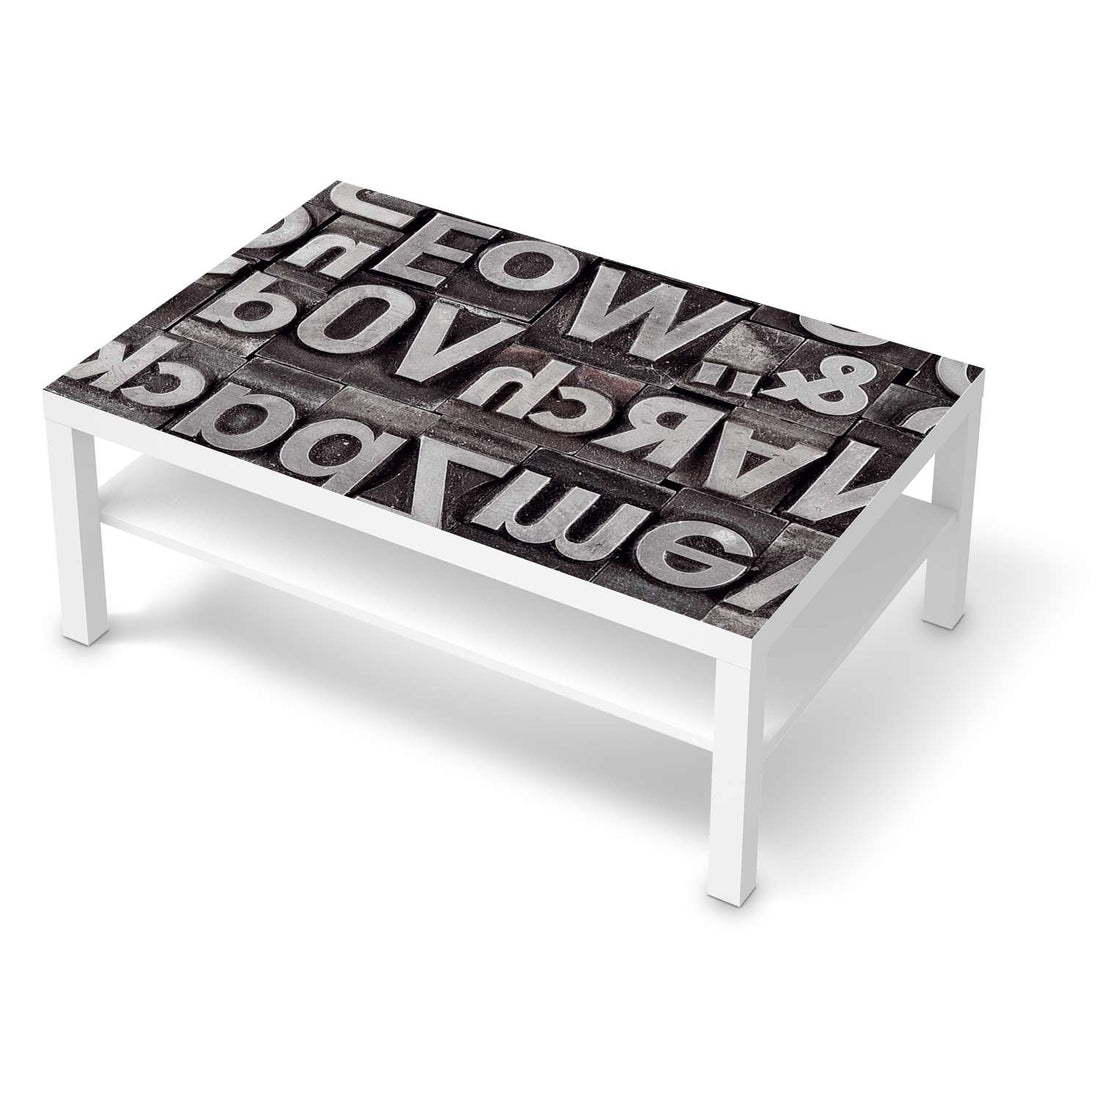 Klebefolie Alphabet - IKEA Lack Tisch 118x78 cm - weiss